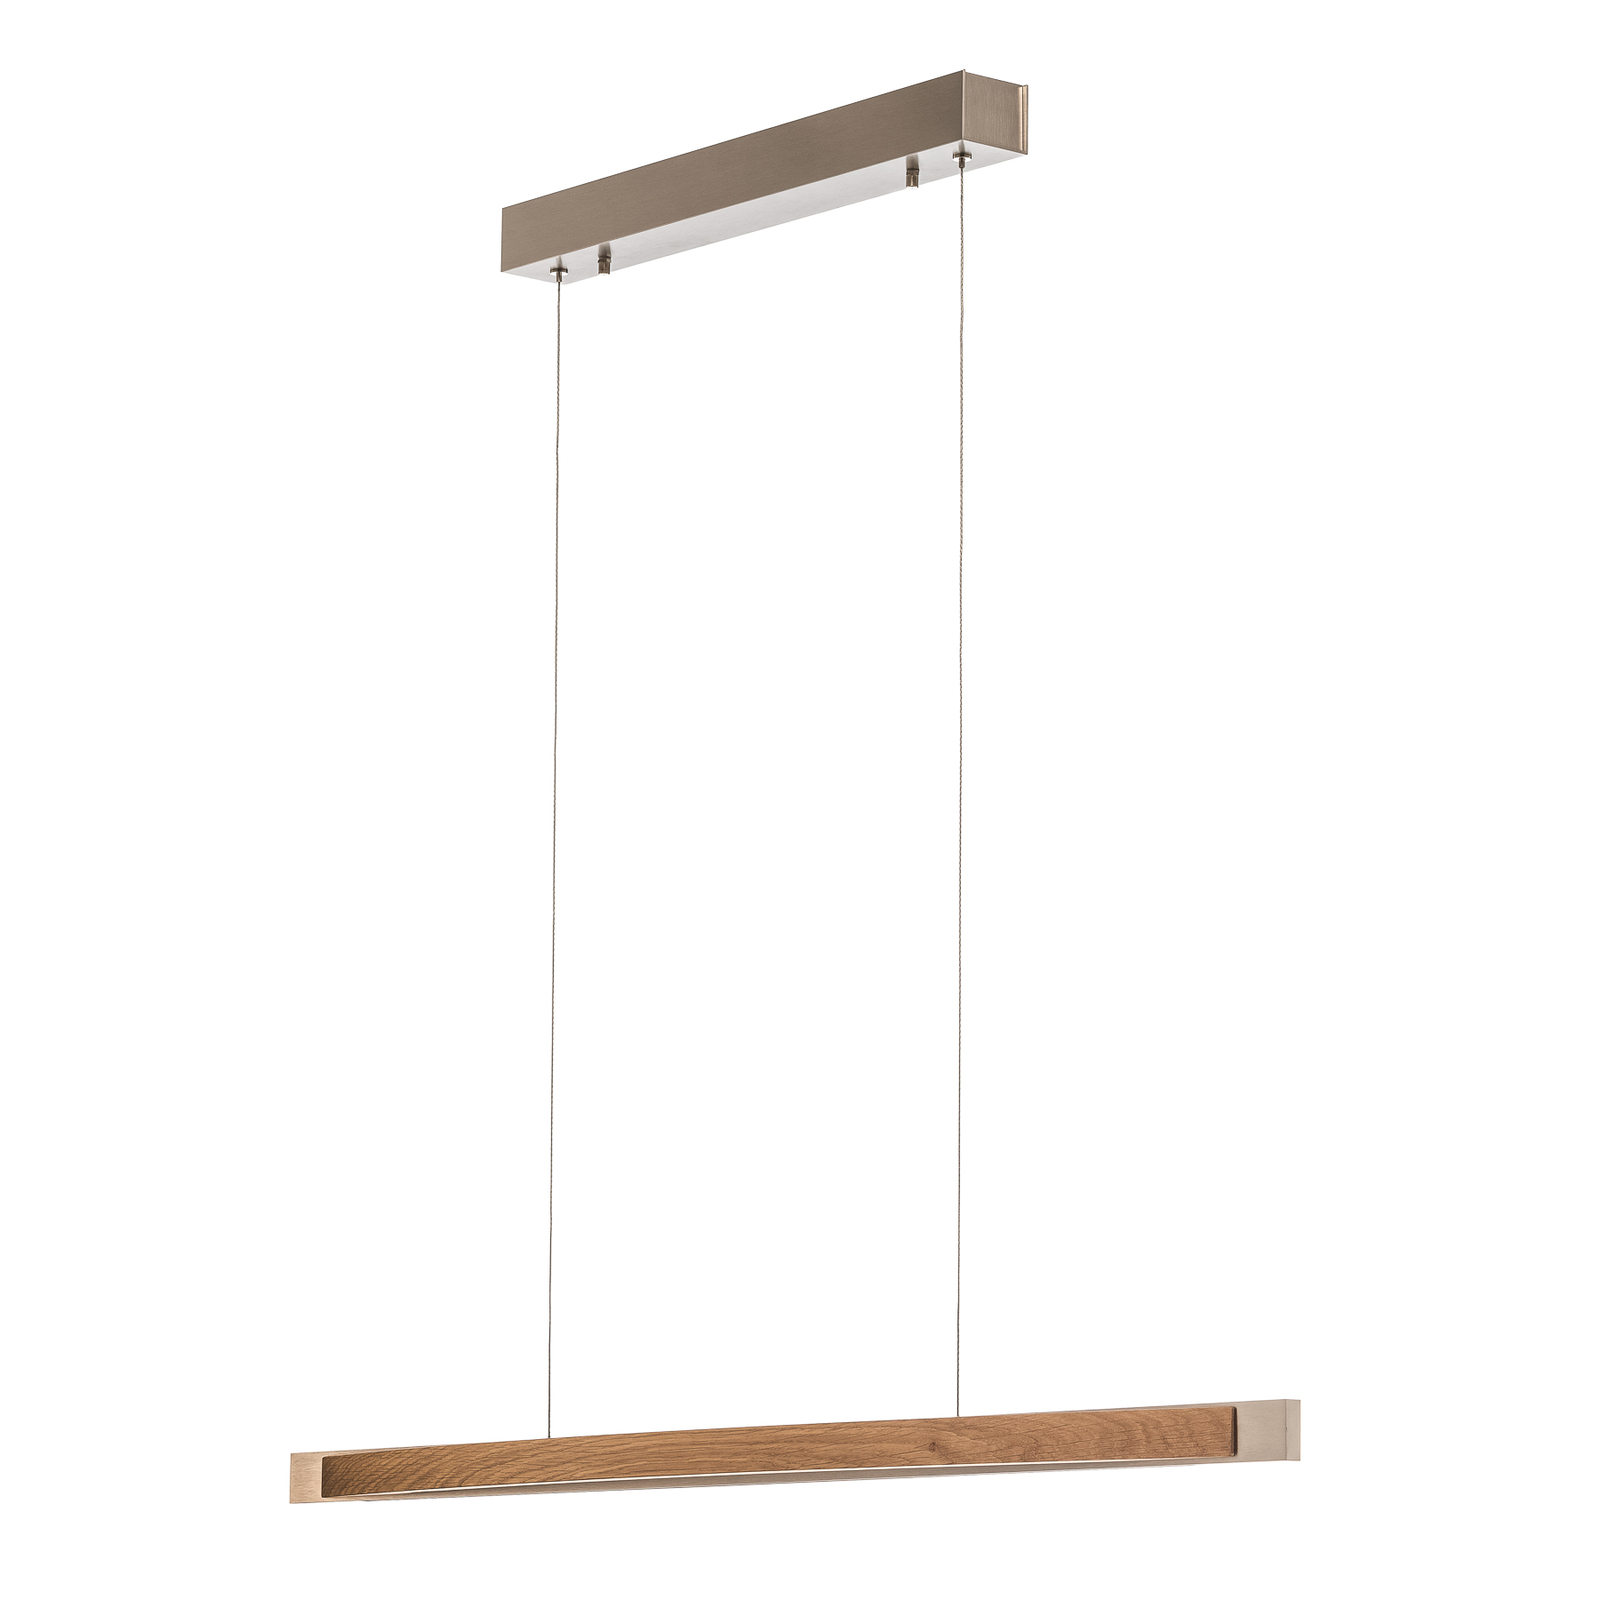 Quitani hanglamp Kiera, eiken/nikkel, 98 cm